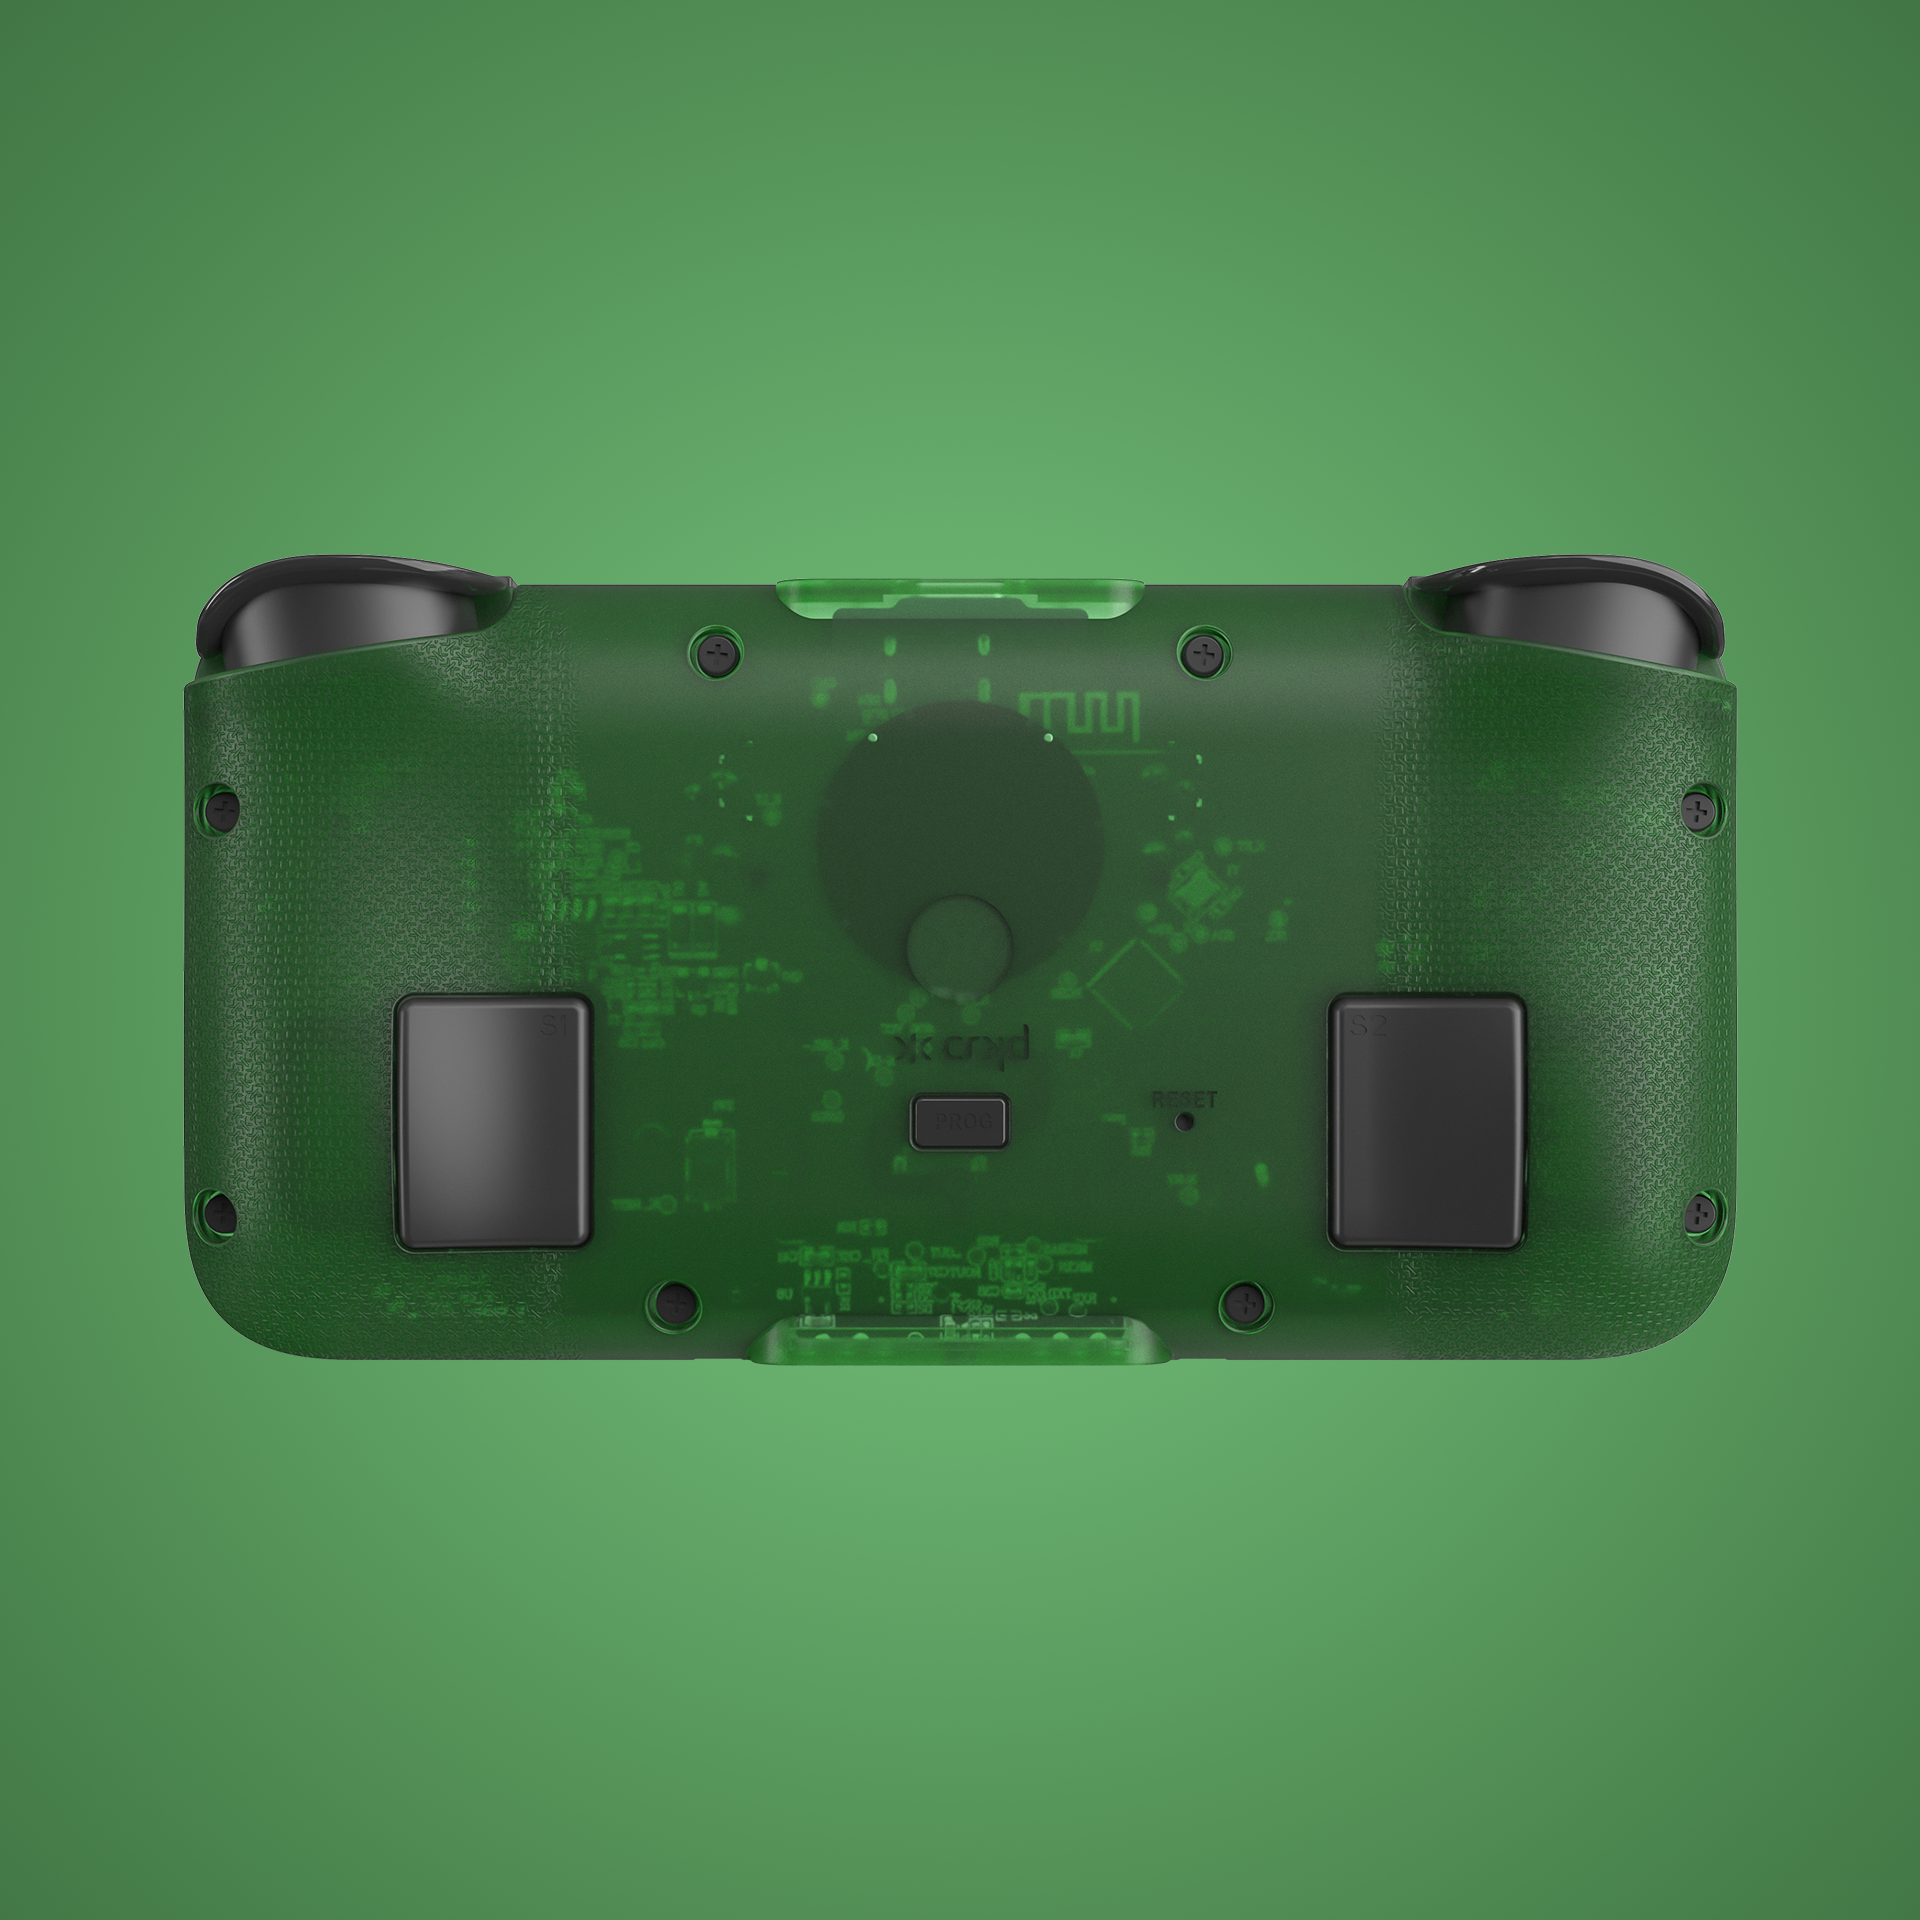 NEO S Emerald Green Edition